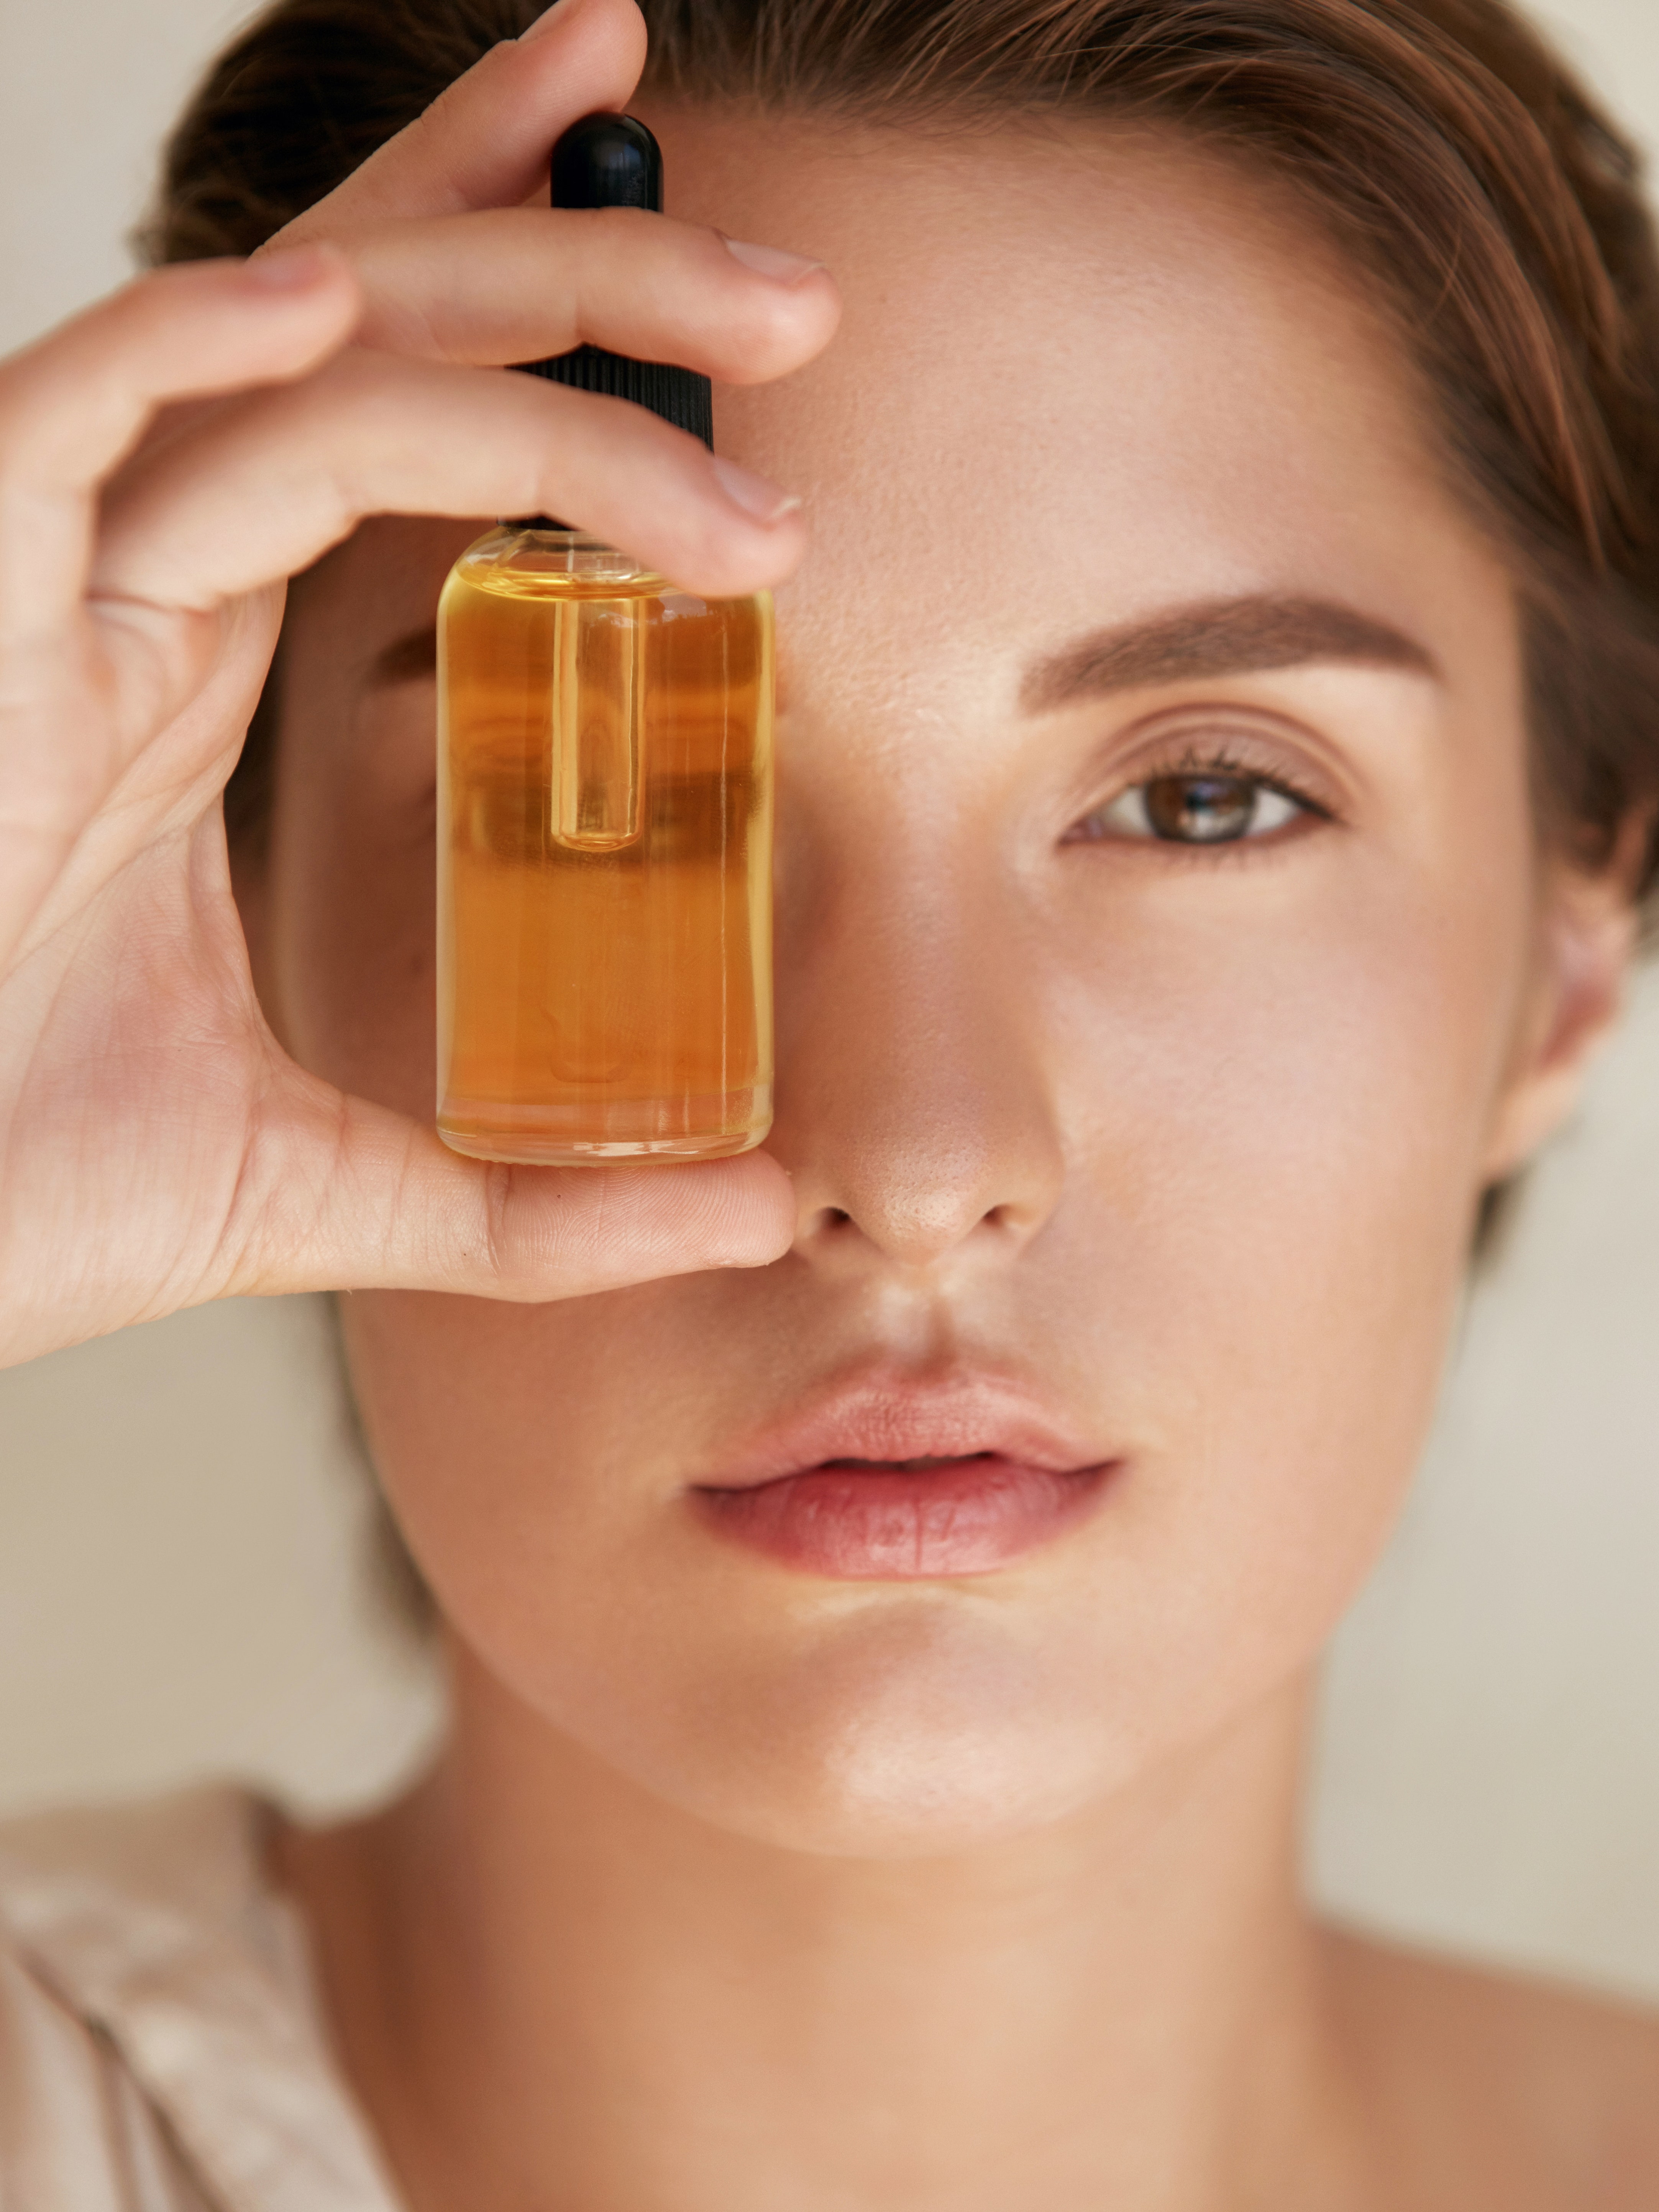 Can Jojoba Oil Really Help Clear Up Acne?